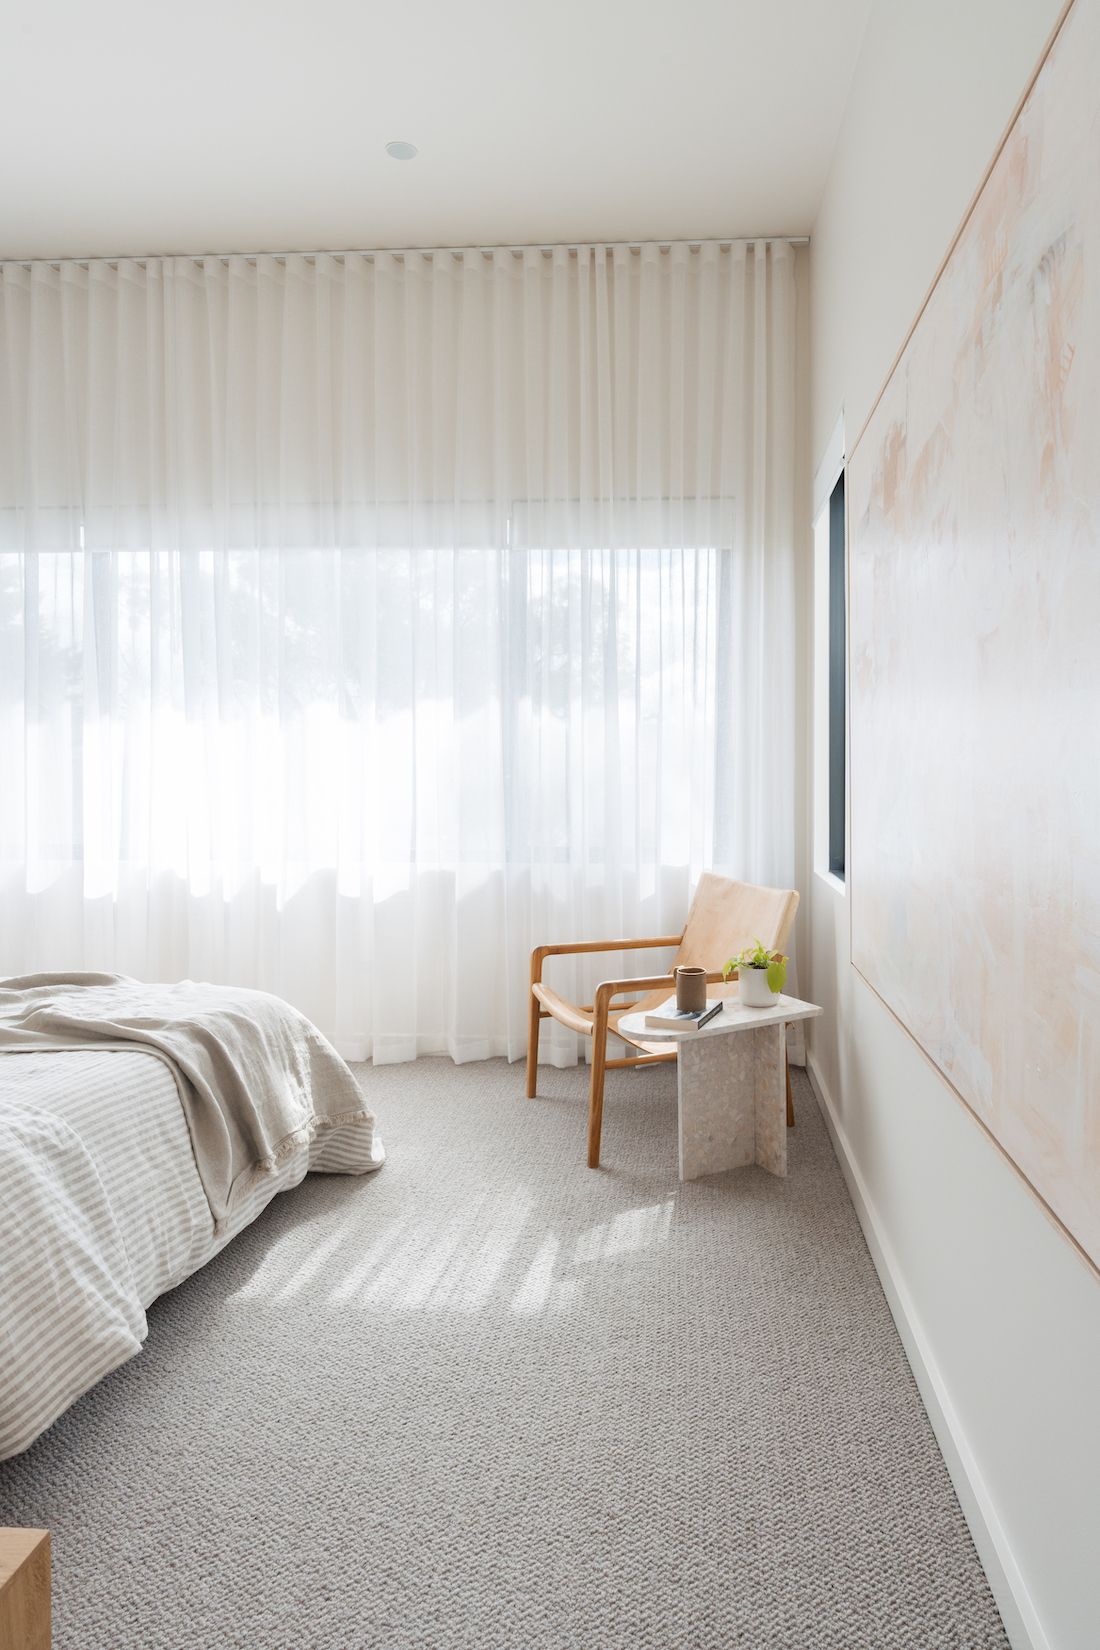 Bedroom Elegance: Bedroom Curtains for Cozy Comfort